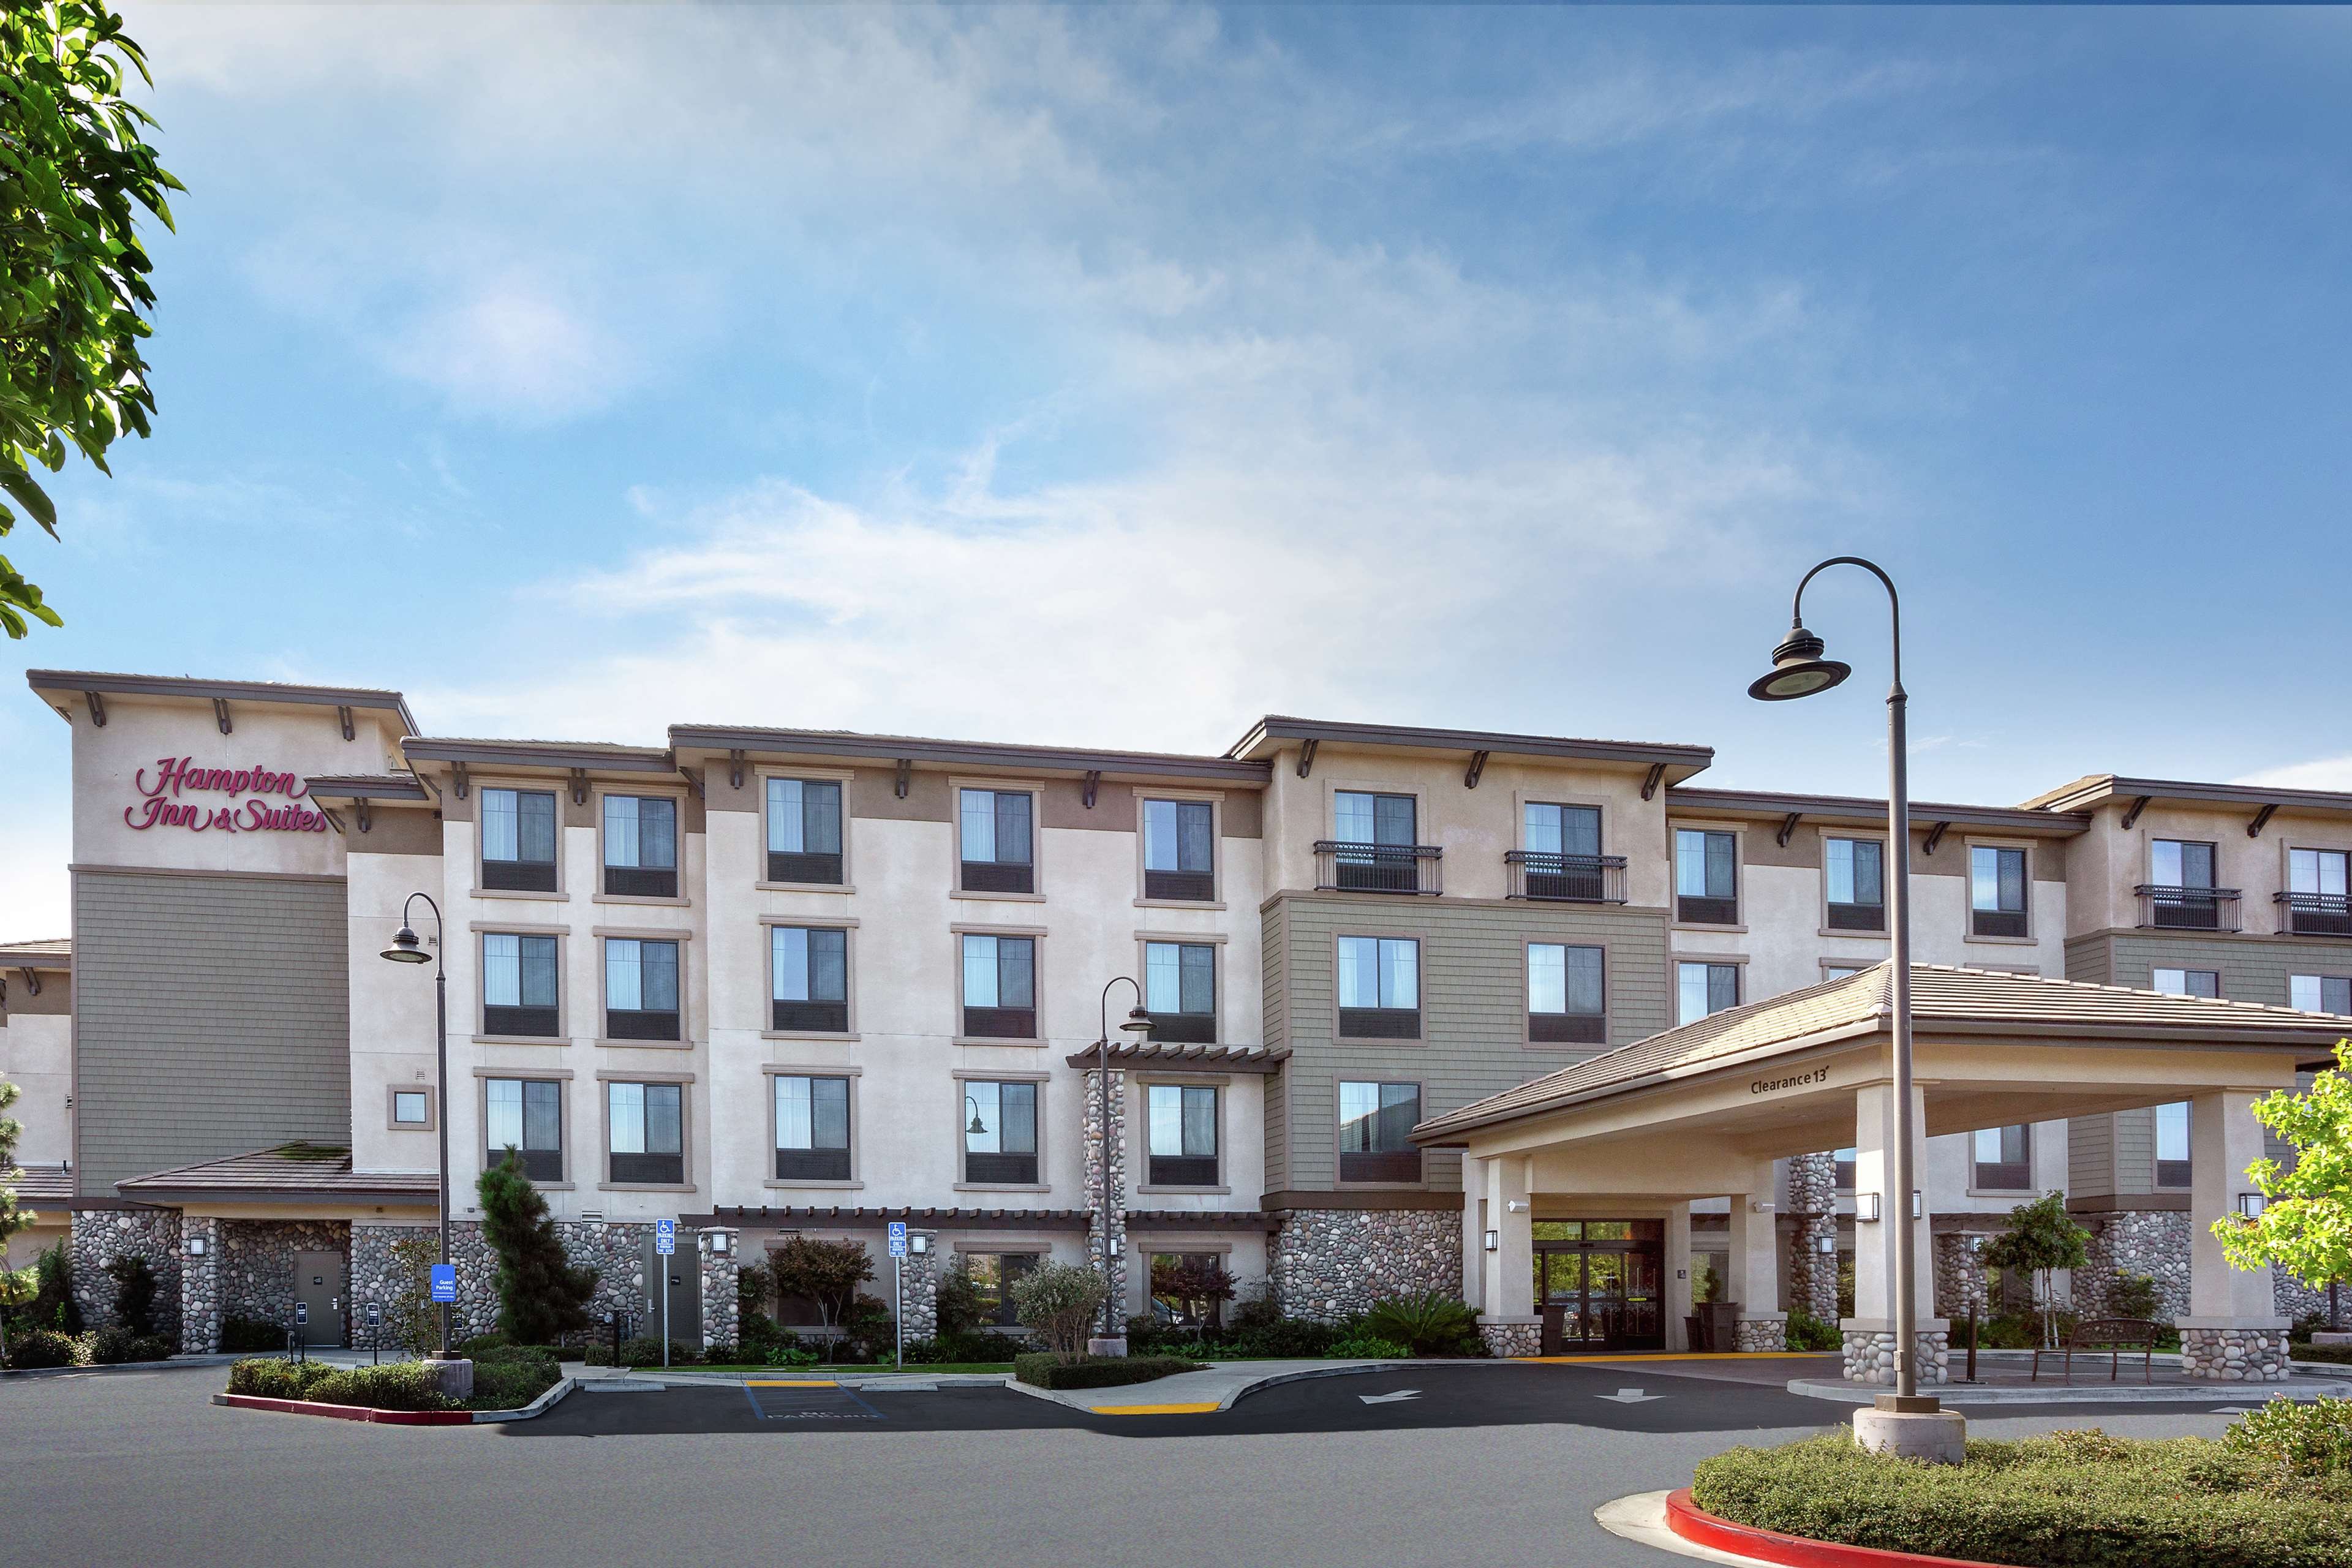 Hampton Inn & Suites San Luis Obispo image